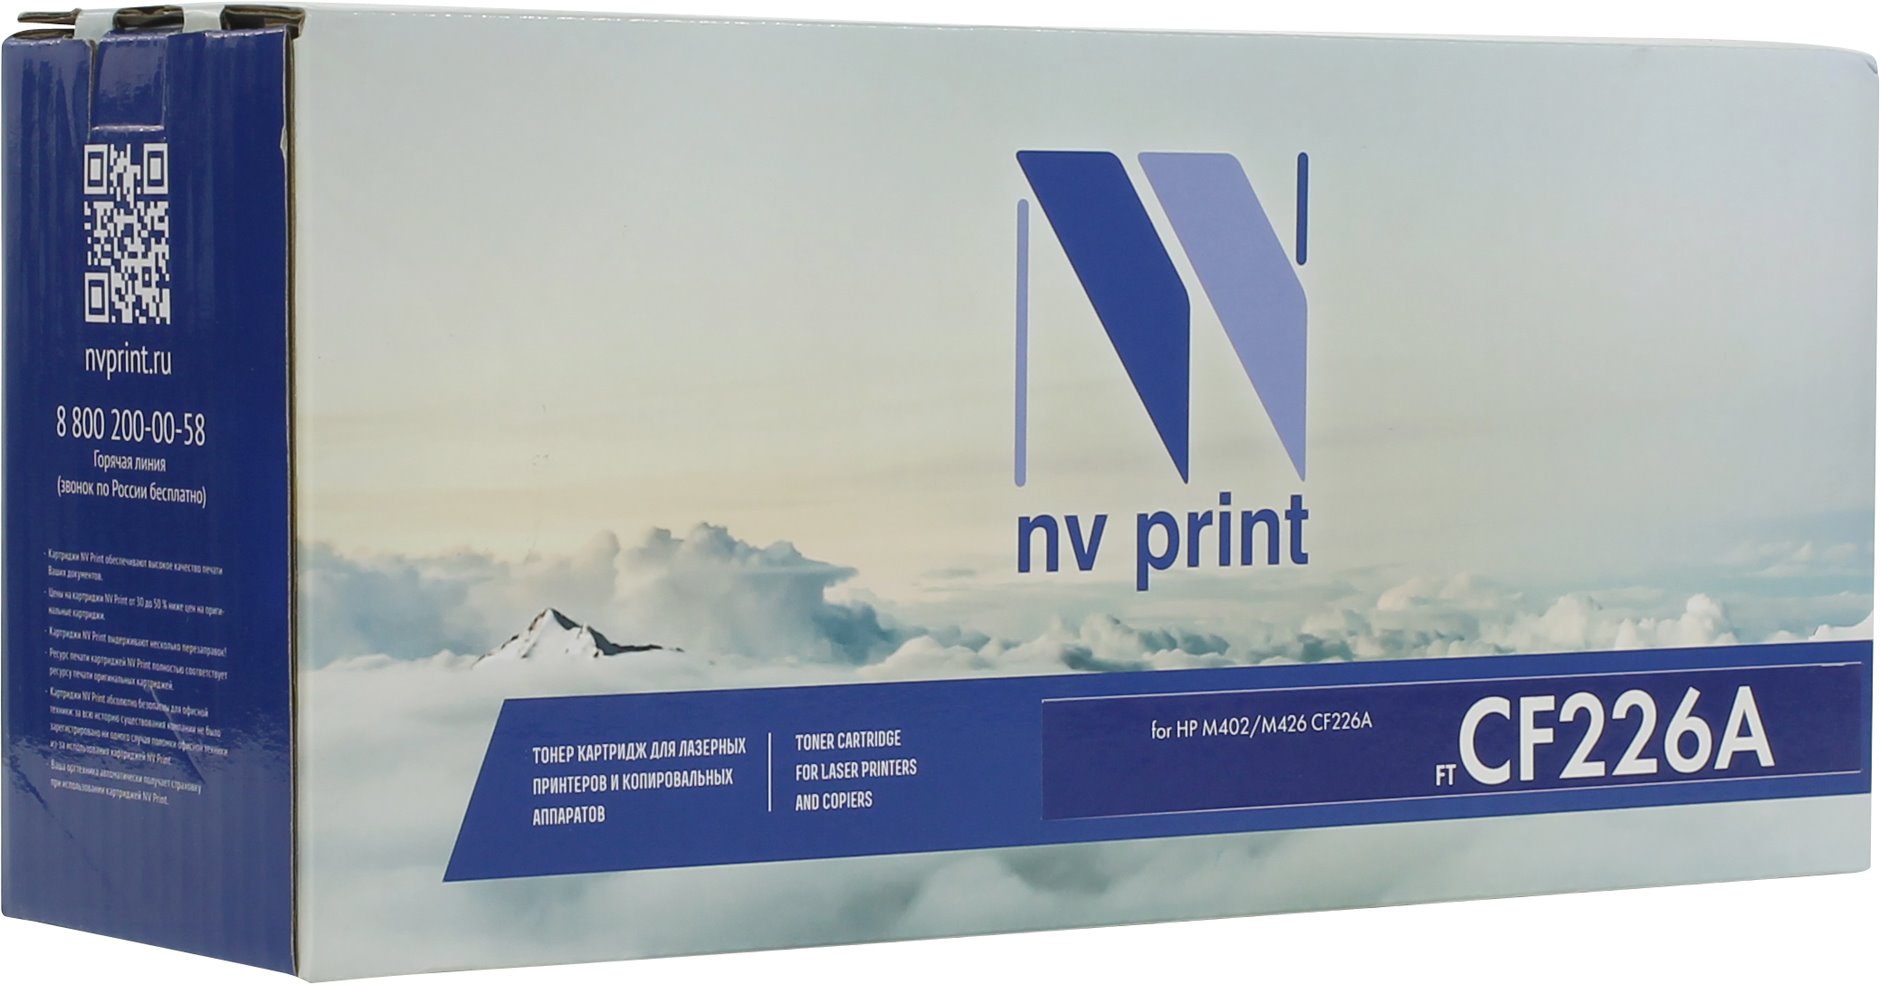   NV-Print  HP M402/M426 CF226A